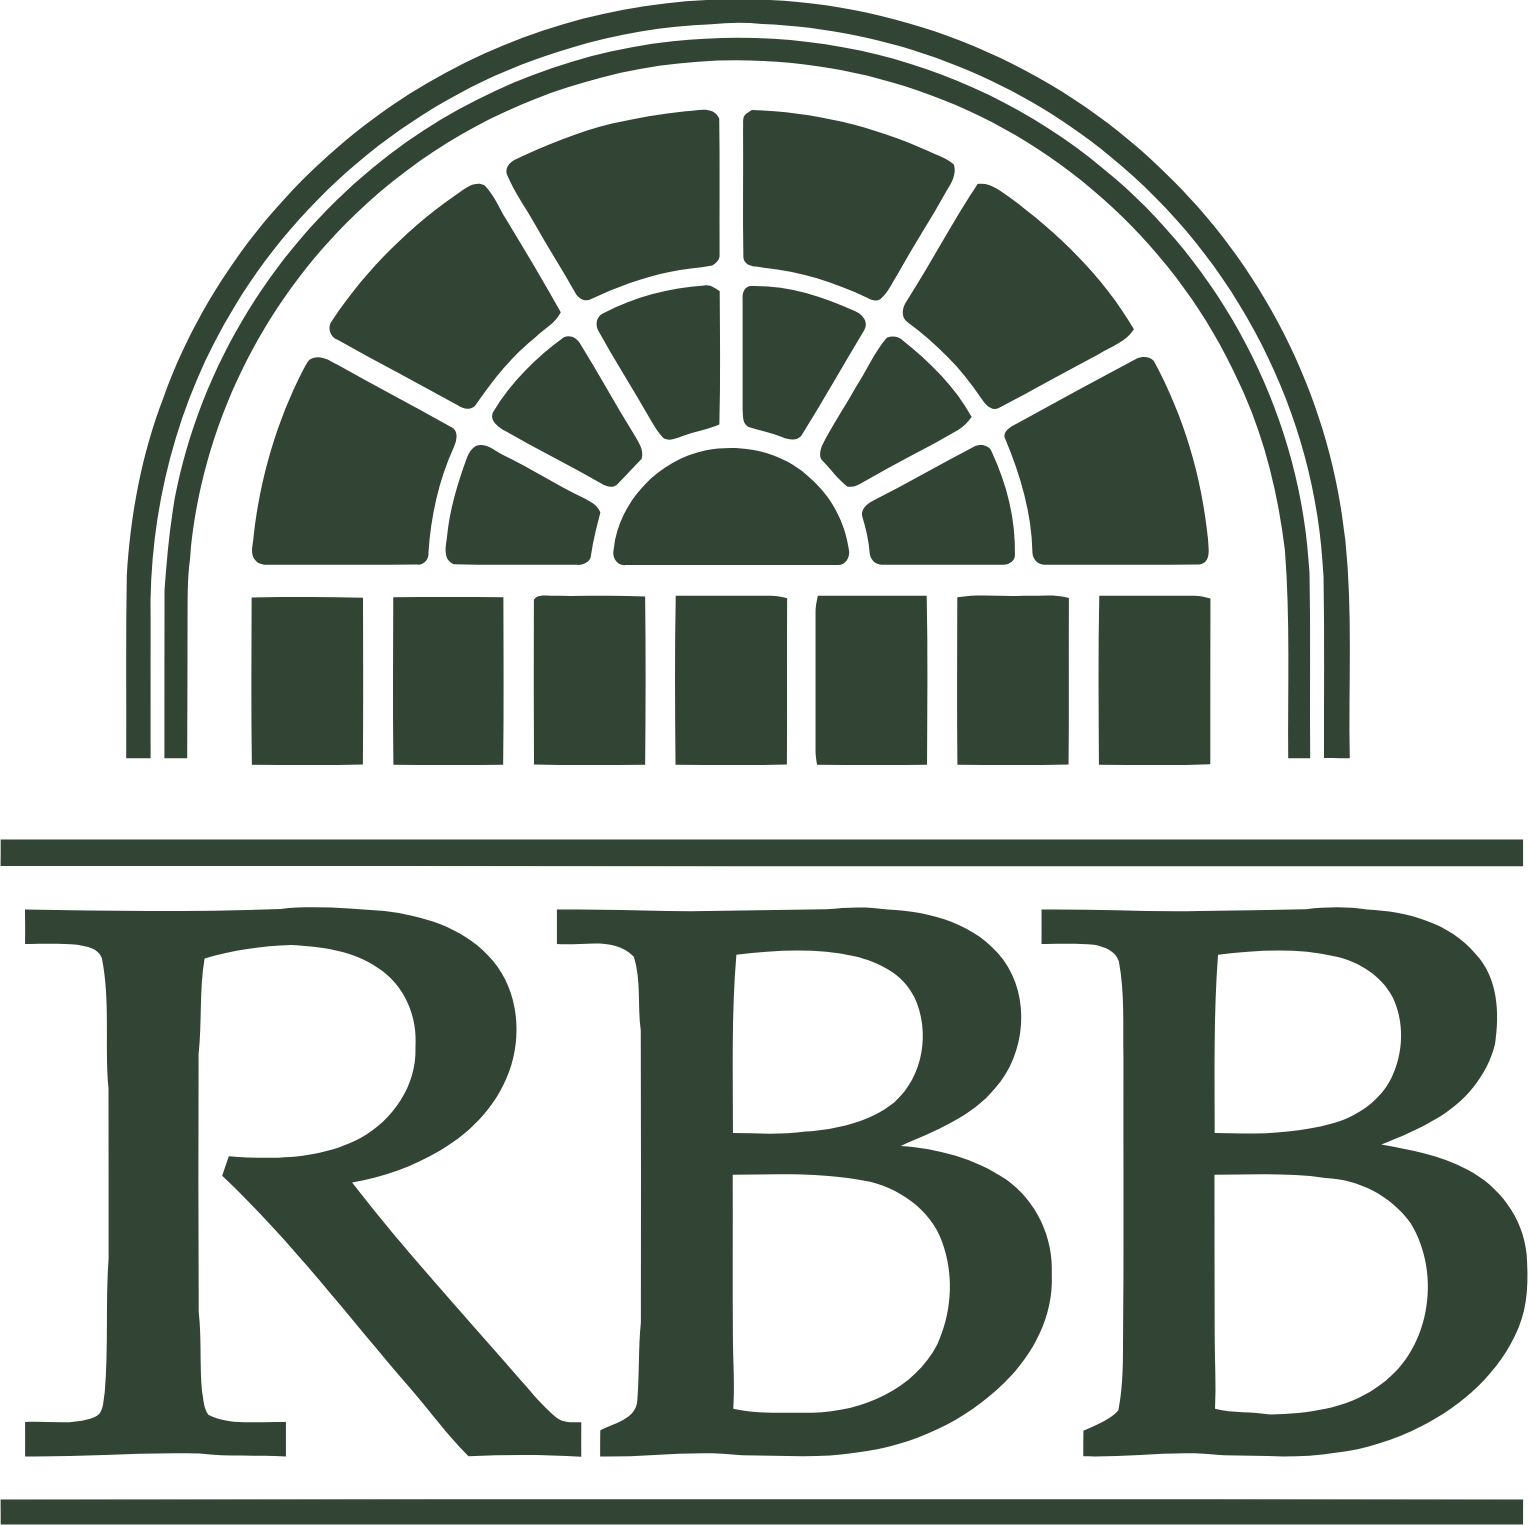 Rbb Fund logo (transparent PNG)